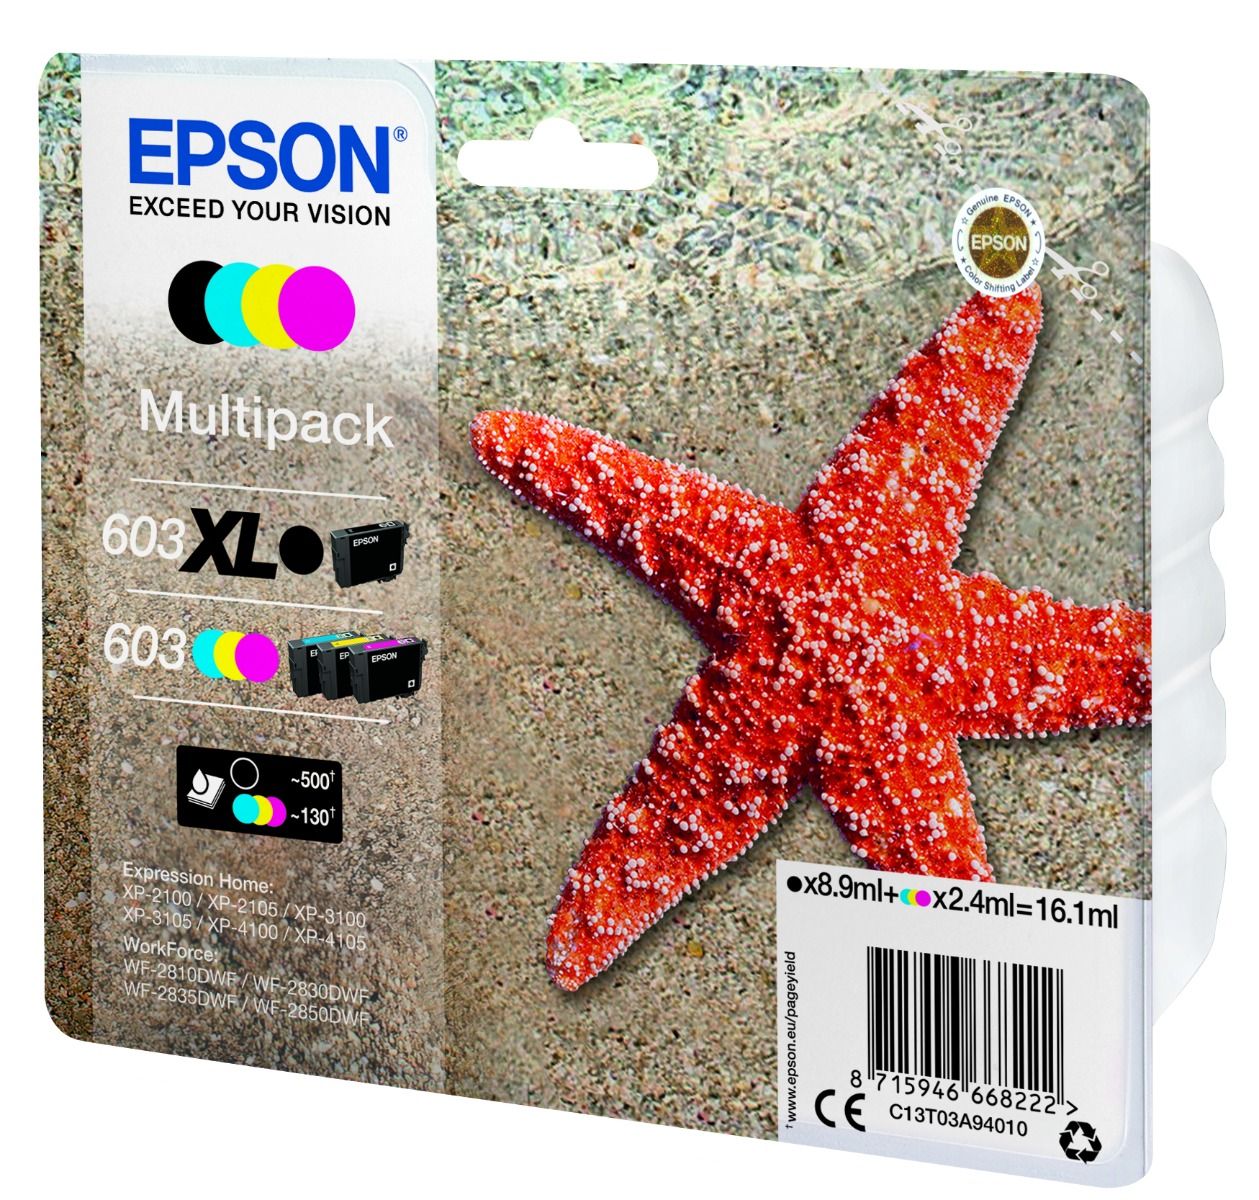 4 Color Epson 603XL Black, 603 CMY Ink Cartridge Multipack - T03A9 (T03A9)